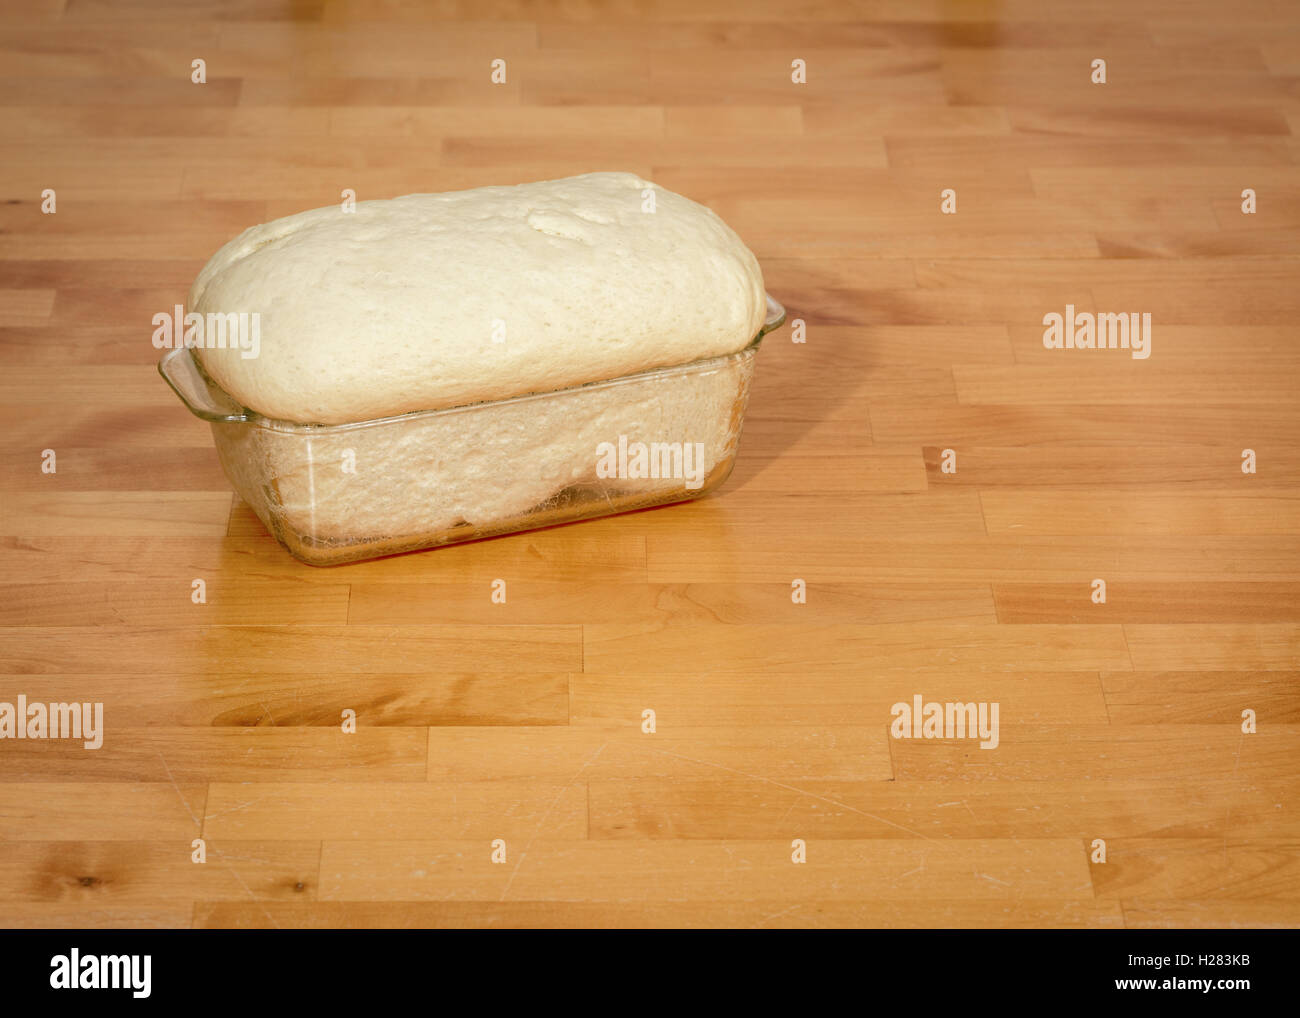 rising bread dough in a glass dish Stock Photo